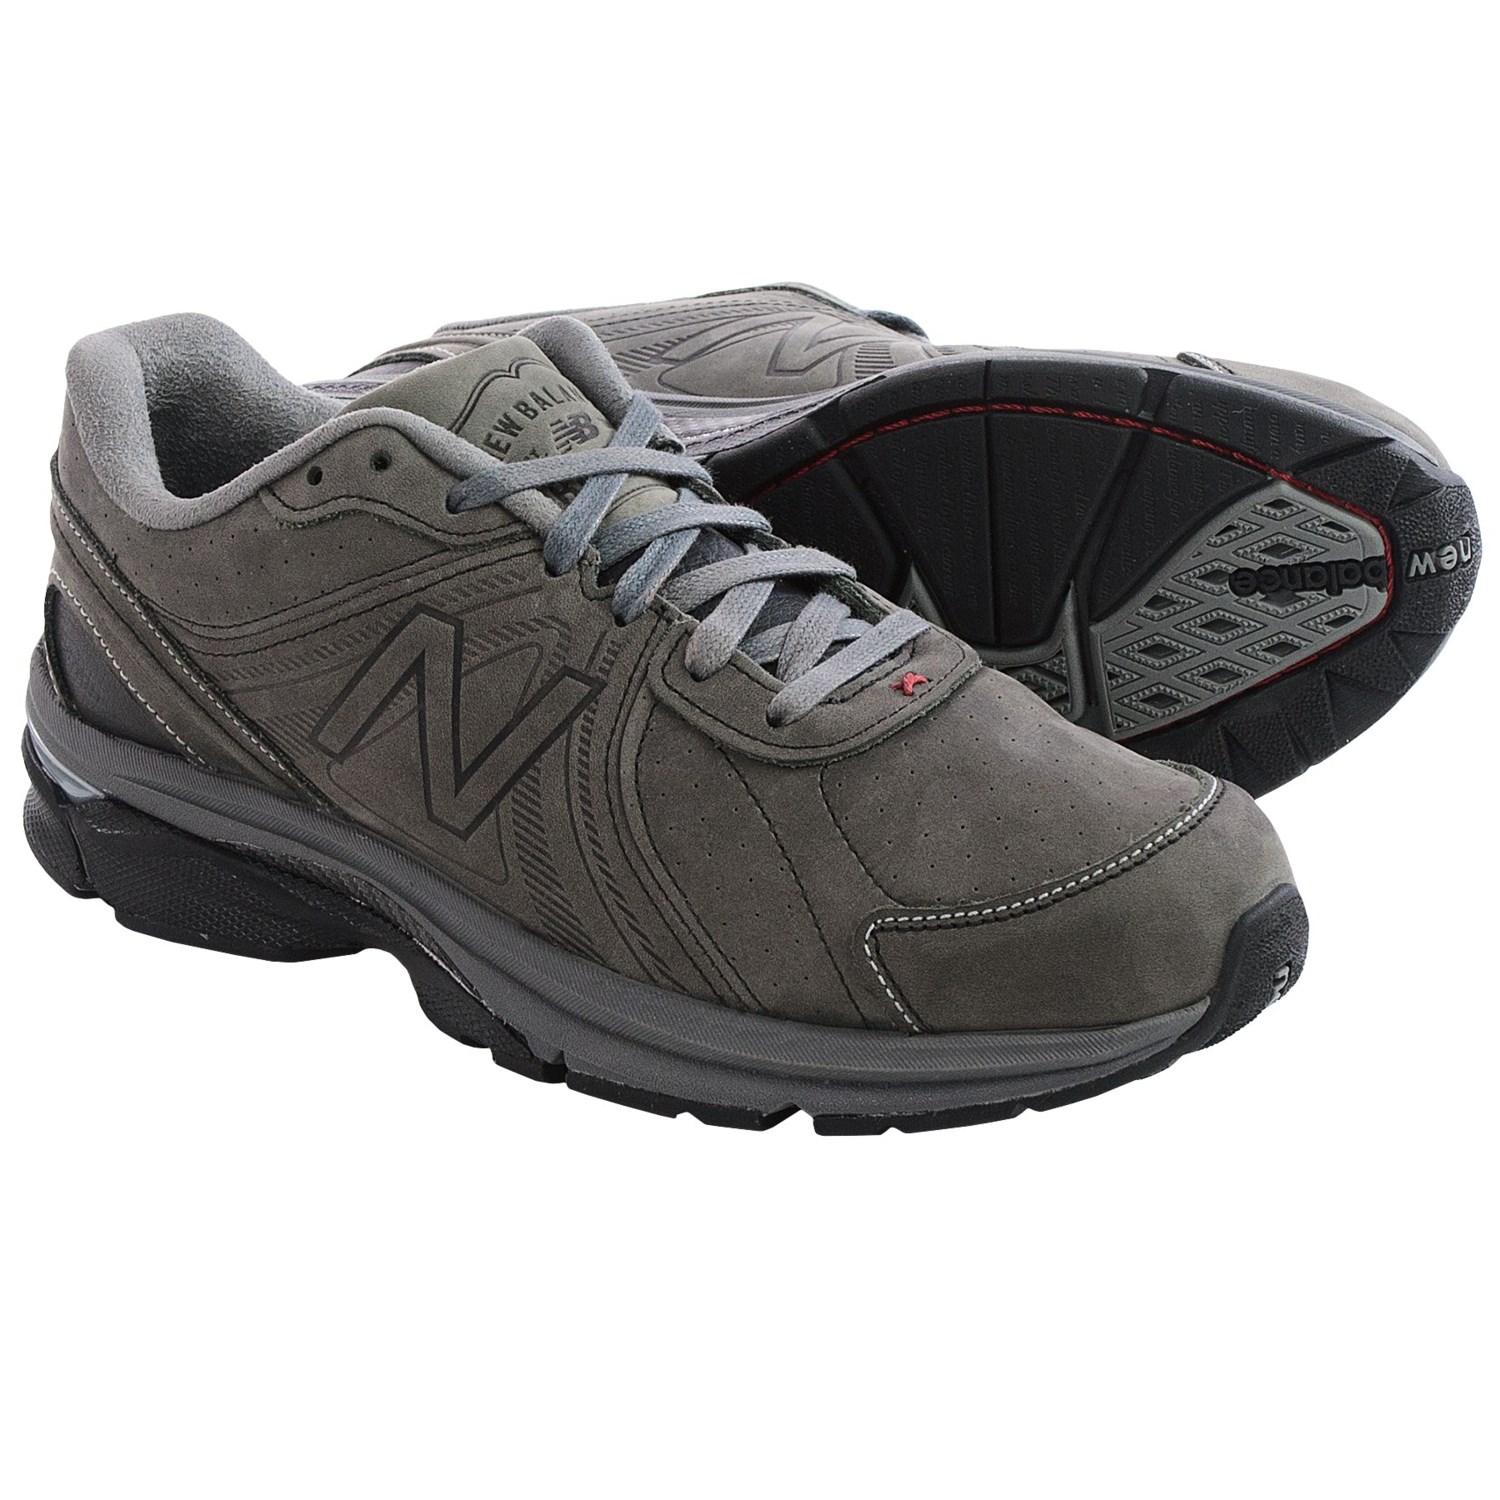 New Balance 2040v2 Running Shoes (For Men) 118VA - Save 57%